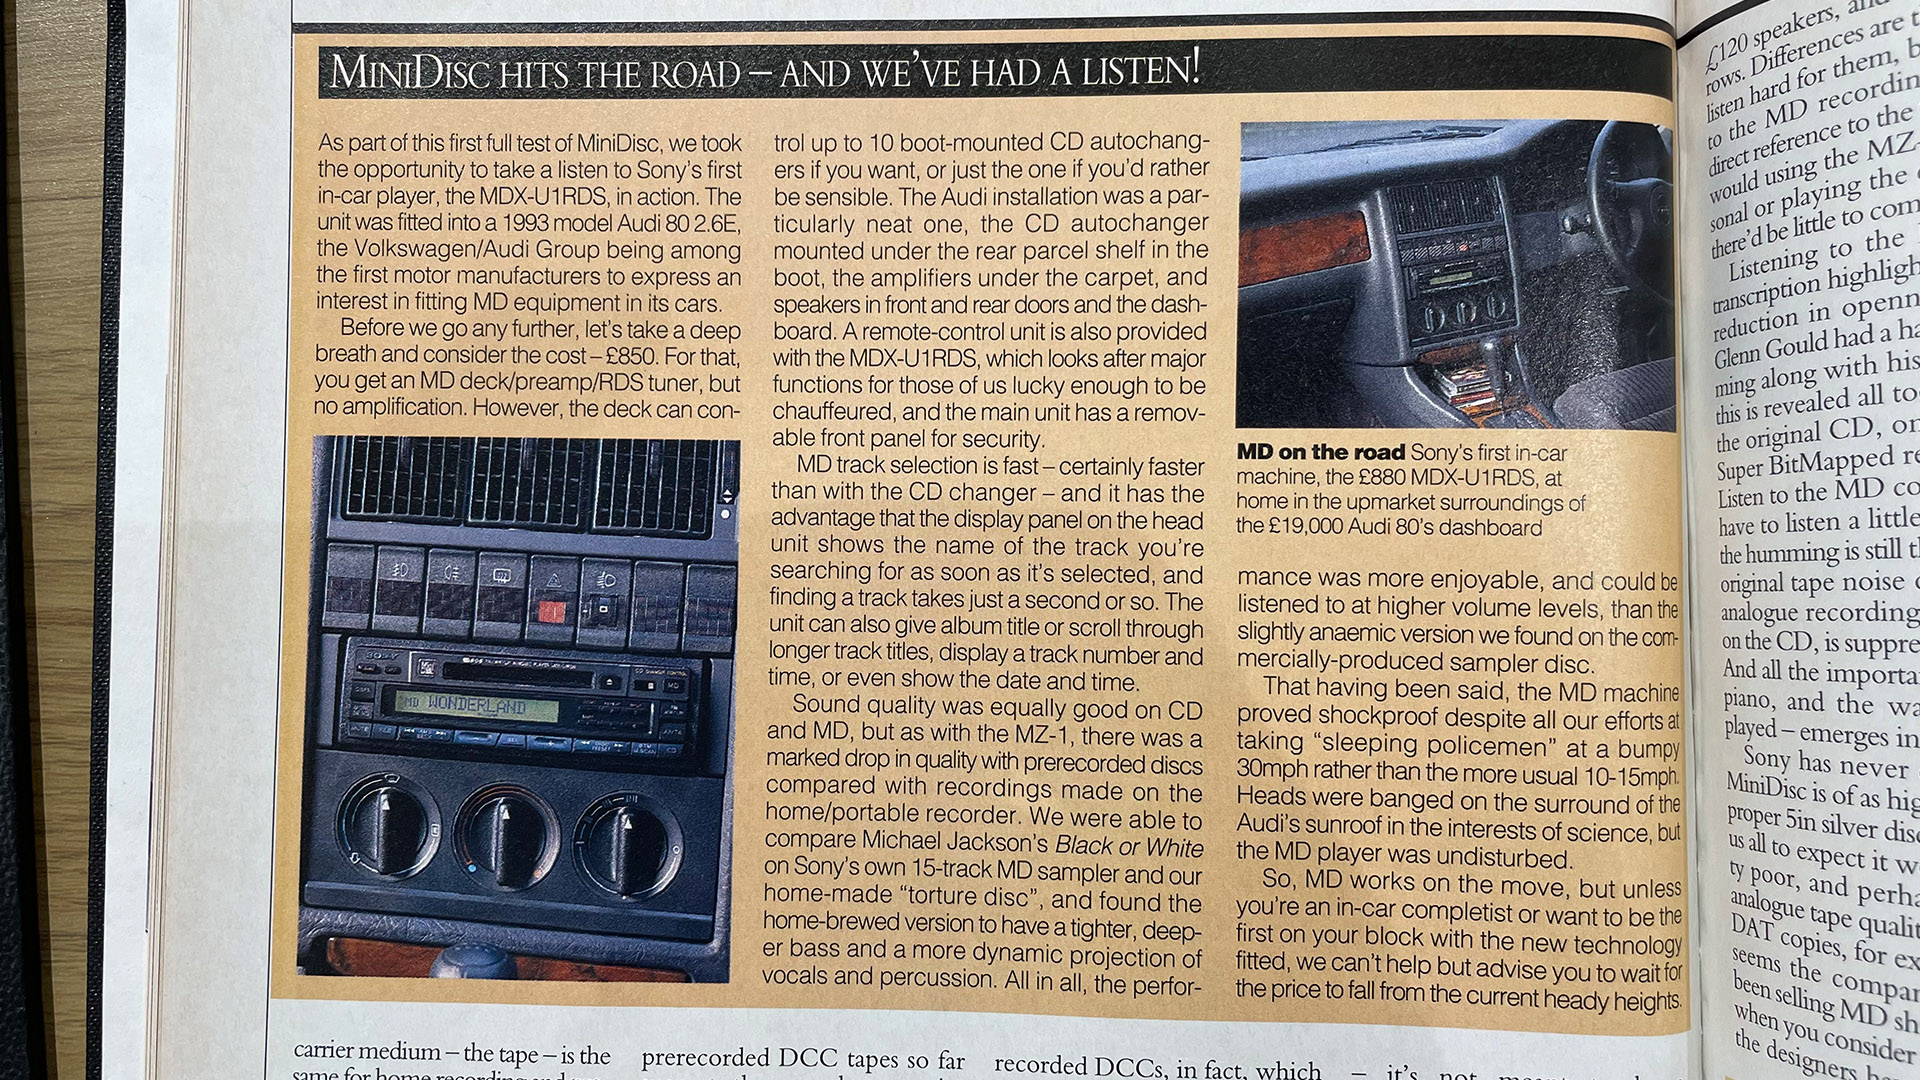 Hangi Hi-Fi?  Ocak 1993 MiniDisc araç içi paneli